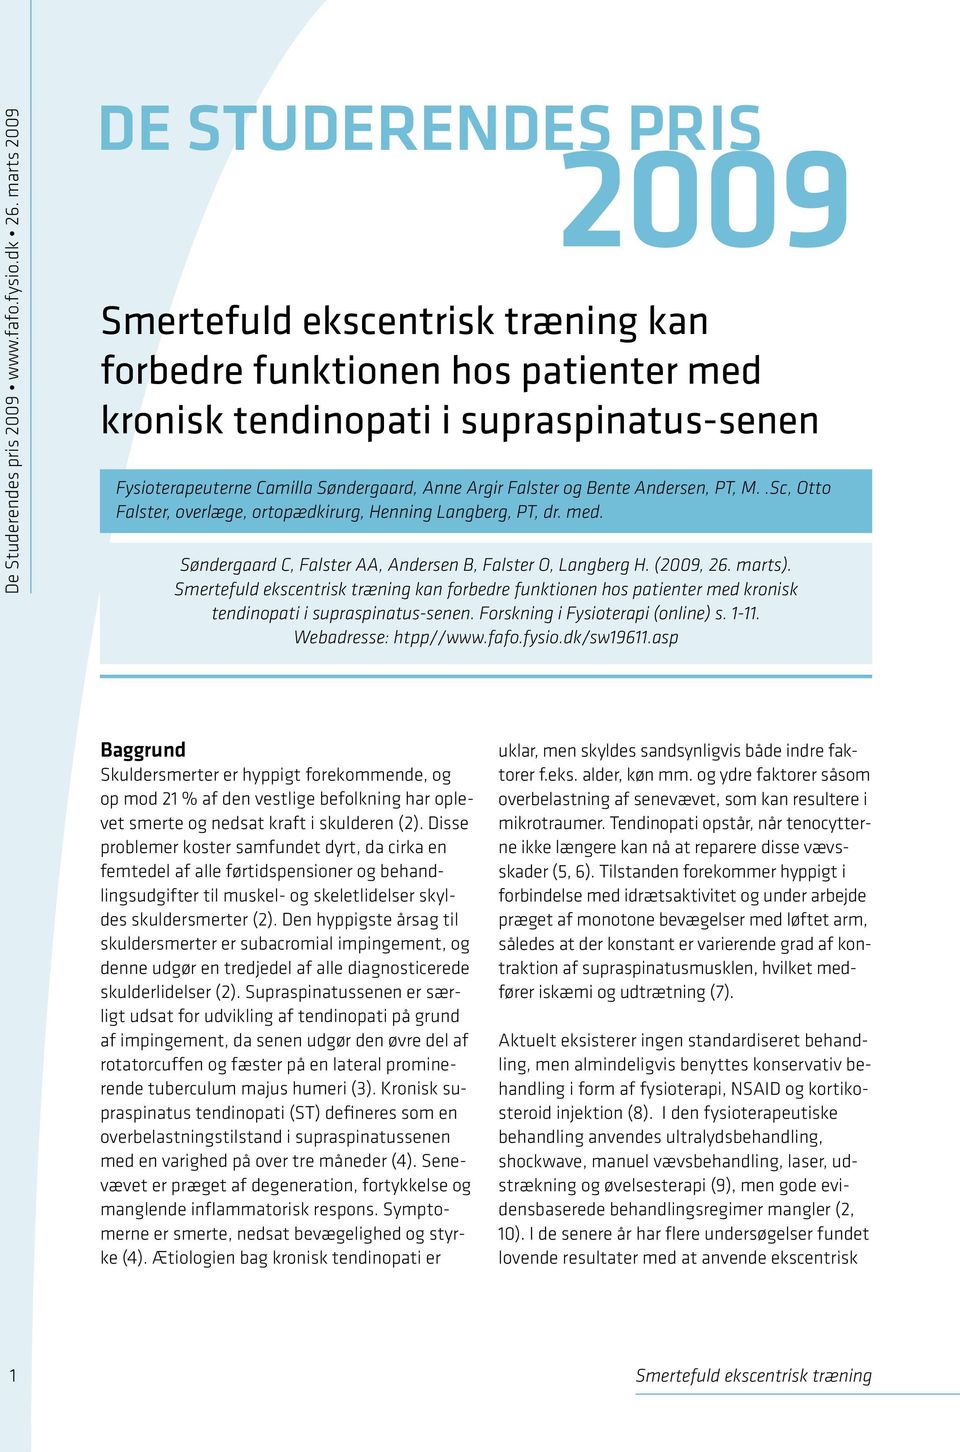 kan forbedre funktionen hos patienter med kronisk tendinopati i supraspinatus-senen. Forskning i Fysioterapi (online) s. 1-11. Webadresse: htpp//www.fafo.fysio.dk/sw19611.